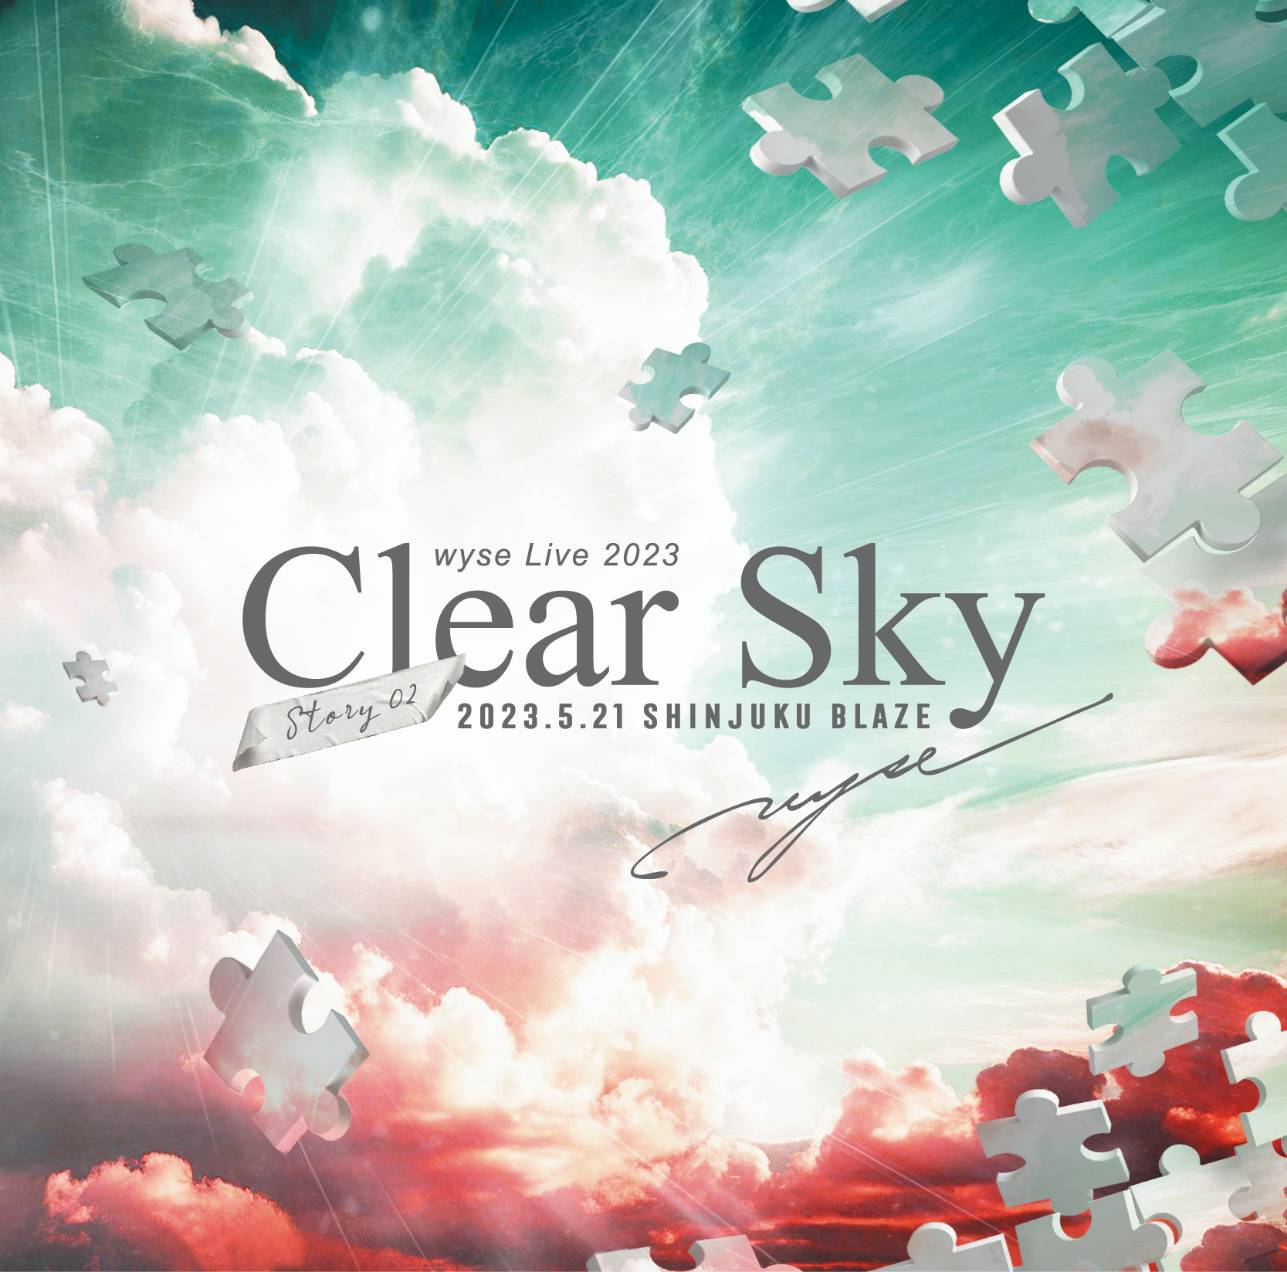 Live CD wyse "Clear Sky Story 02"スペシャルメモリアルセット